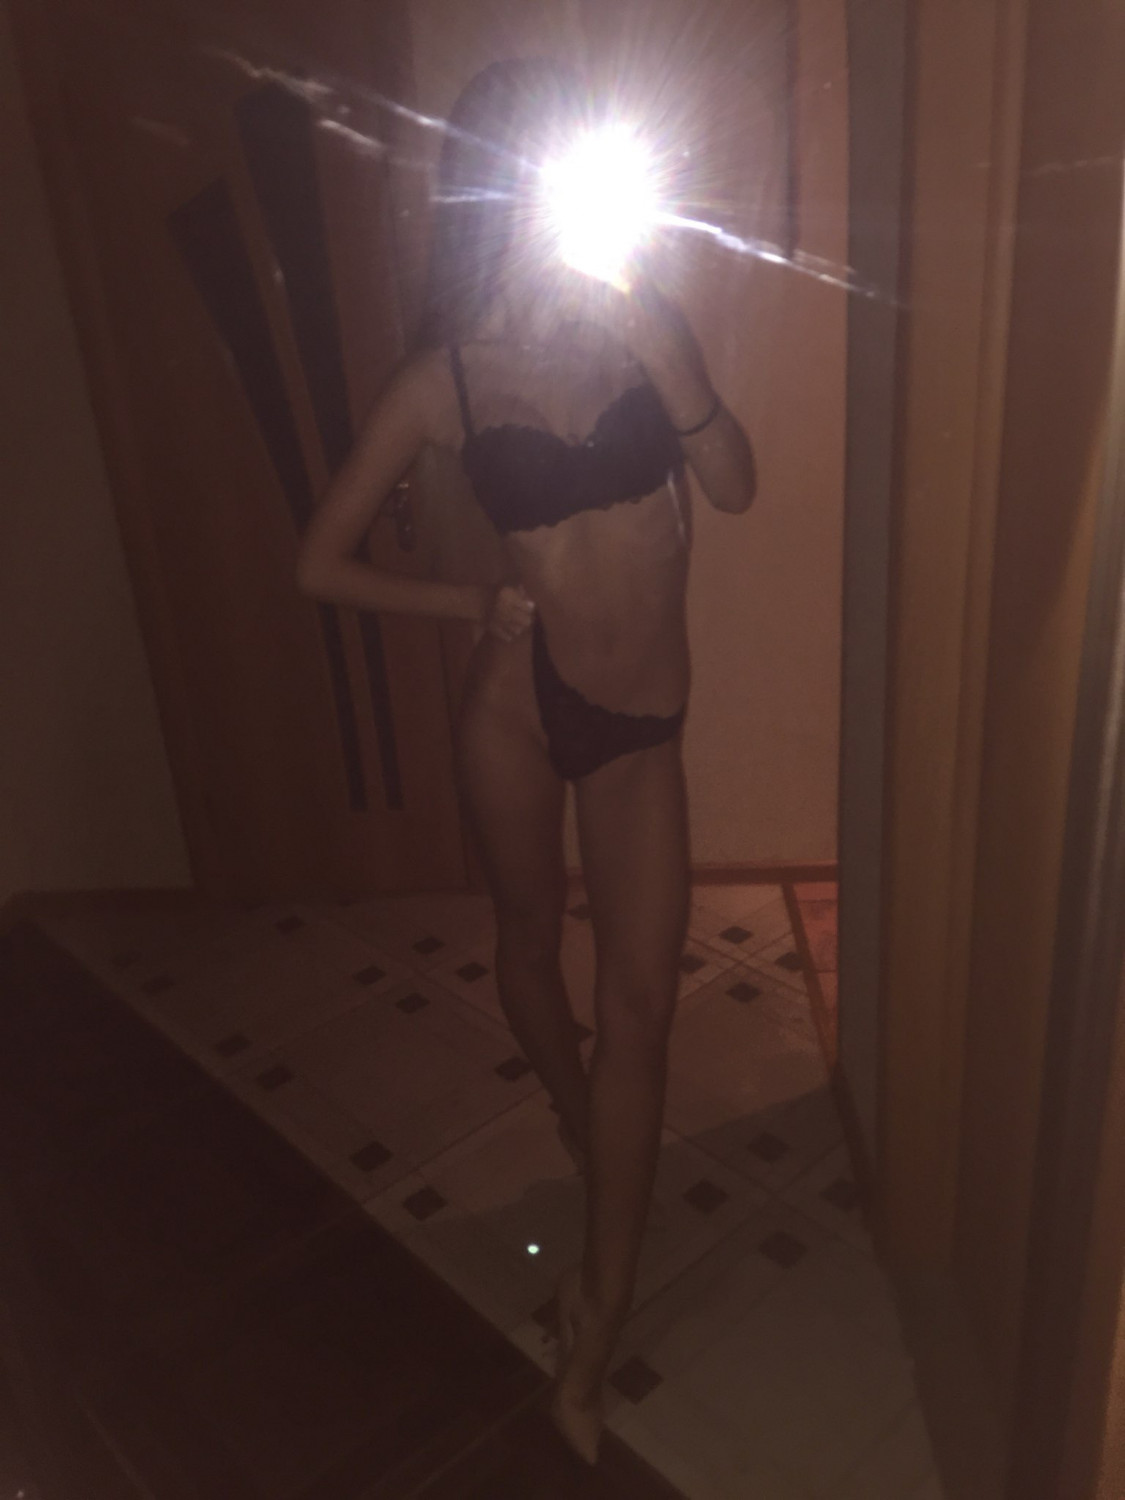 Leaked Nudes of Slim, Hot Blonde Teen - Porn image photo